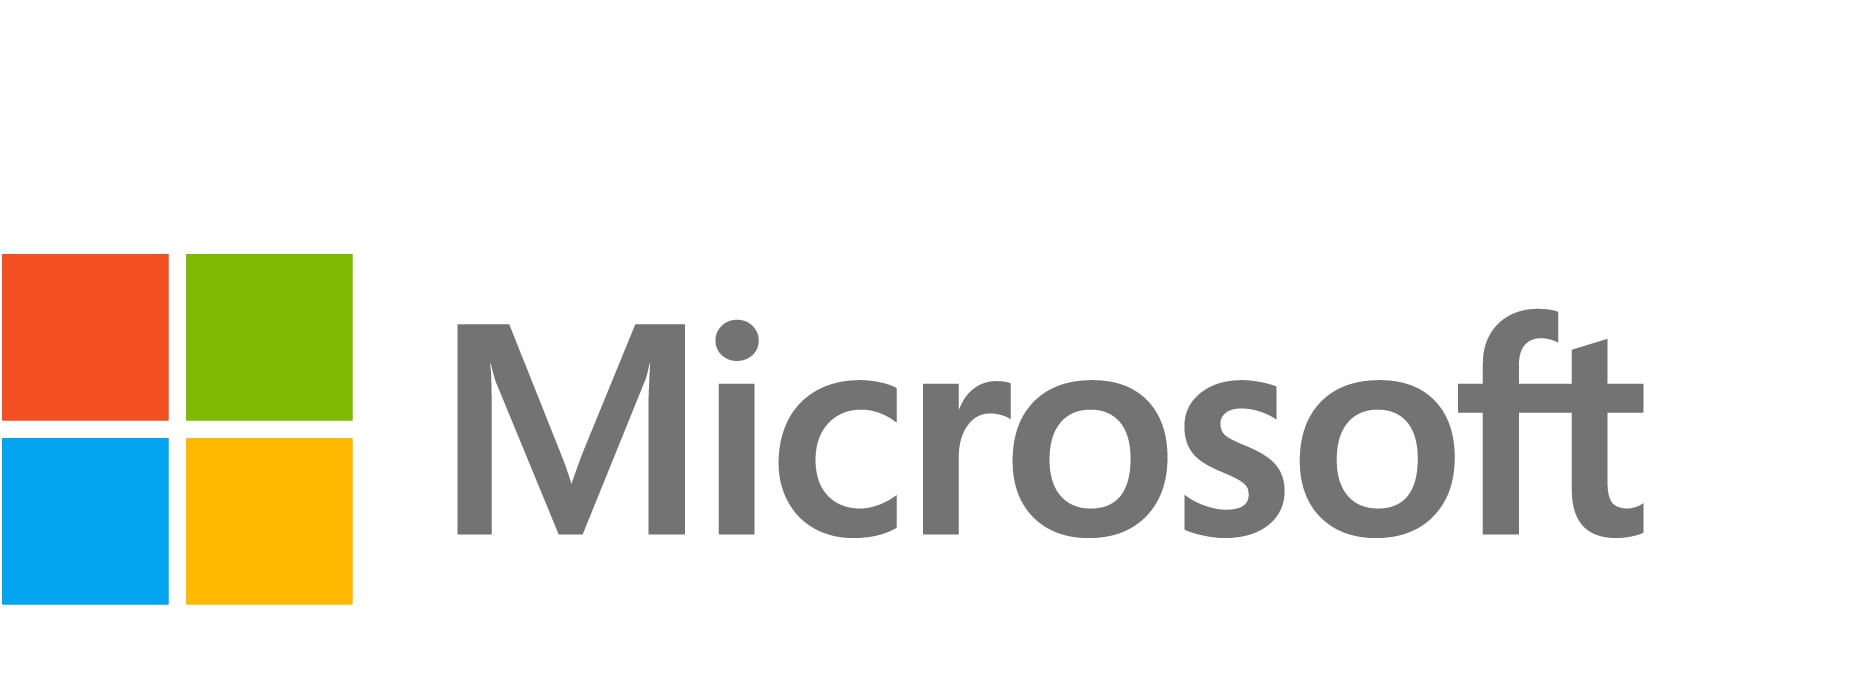 Microsoft Dynamics 365 Human Resources Sandbox - subscription license (1 year) - 1 license